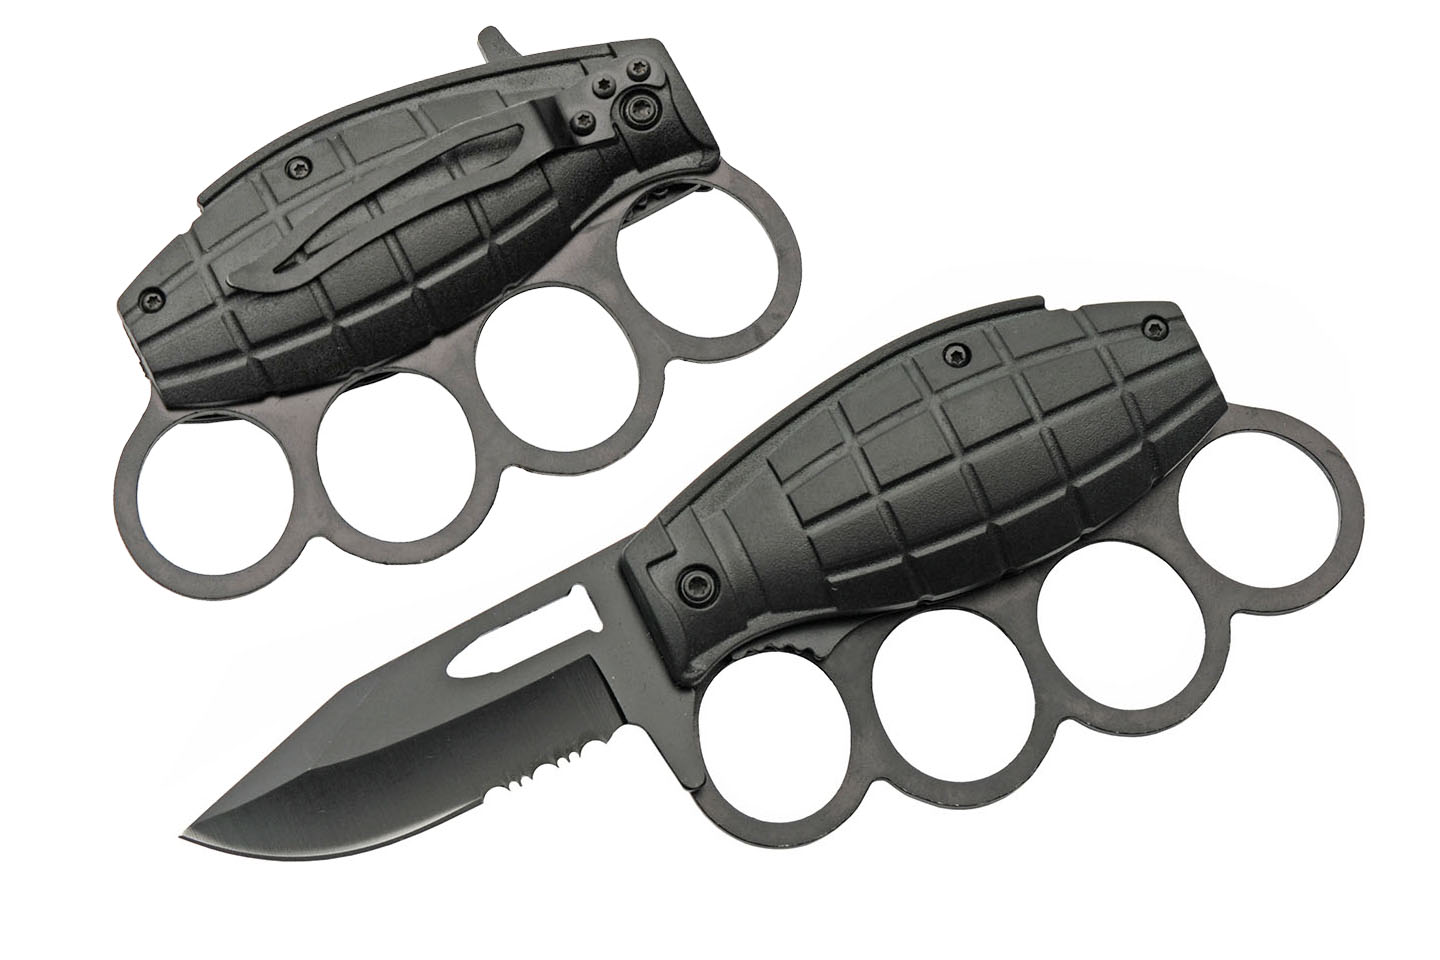 Spring-Assisted Folding Knife | Black Grenade Knuckle Guard Serrated Blade